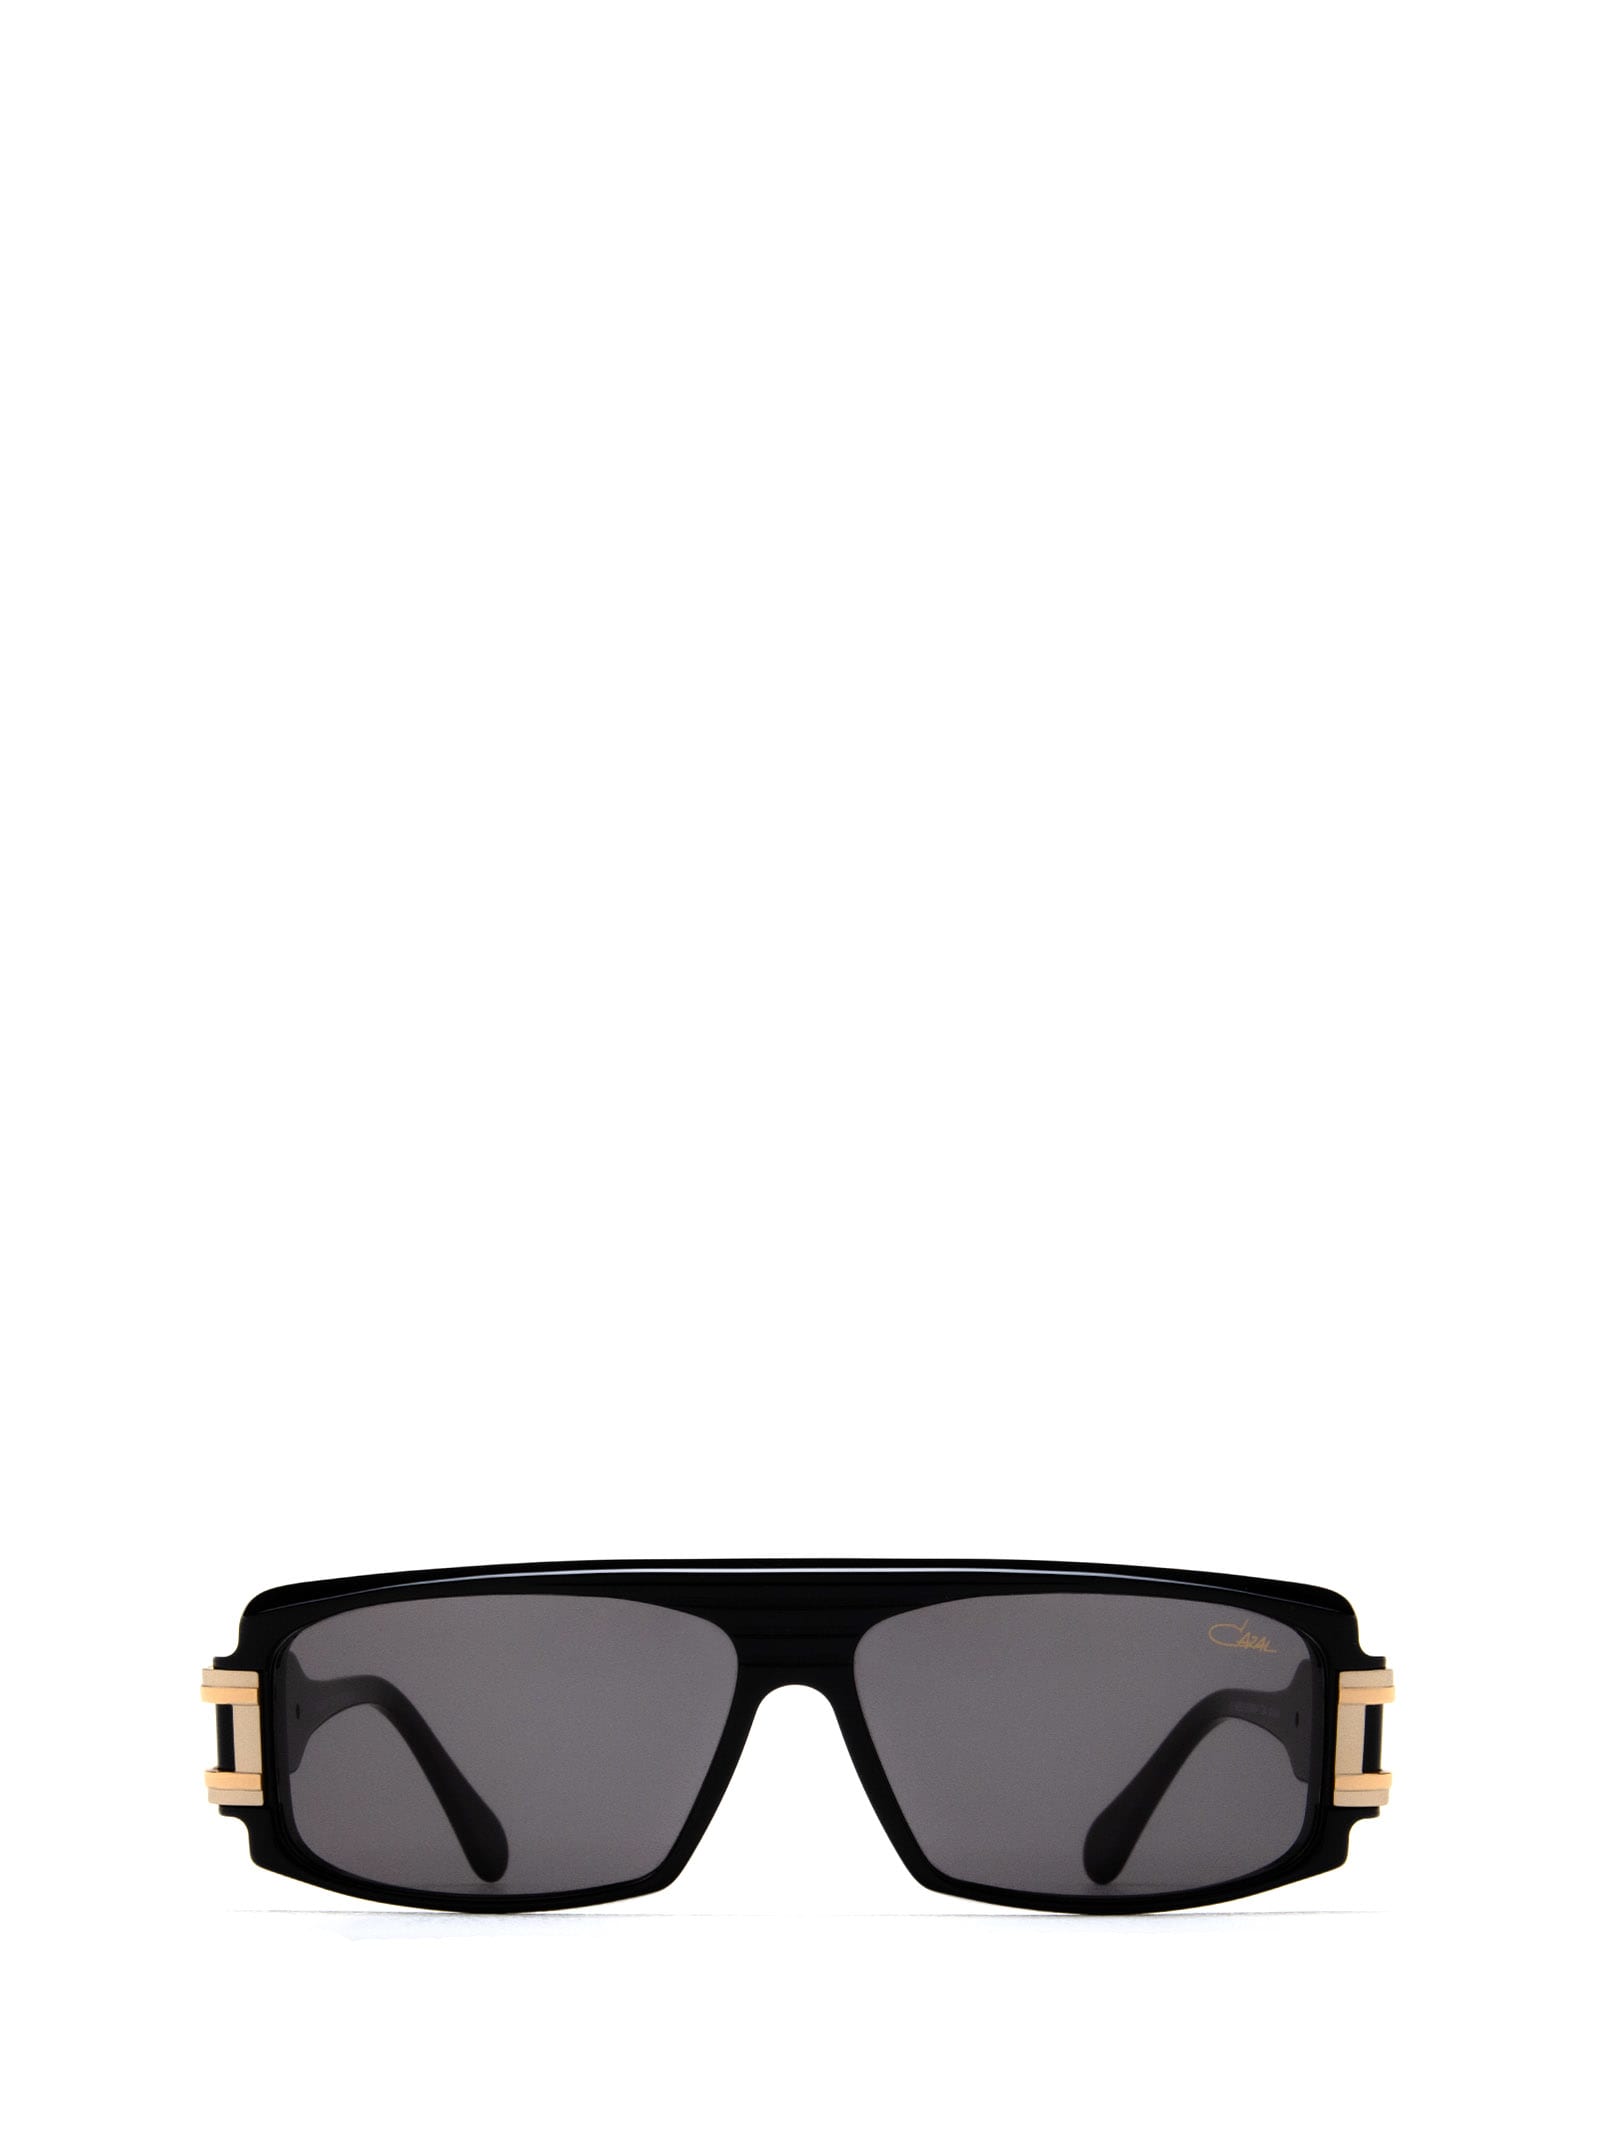 Cazal 164/3 Black - Gold Sunglasses